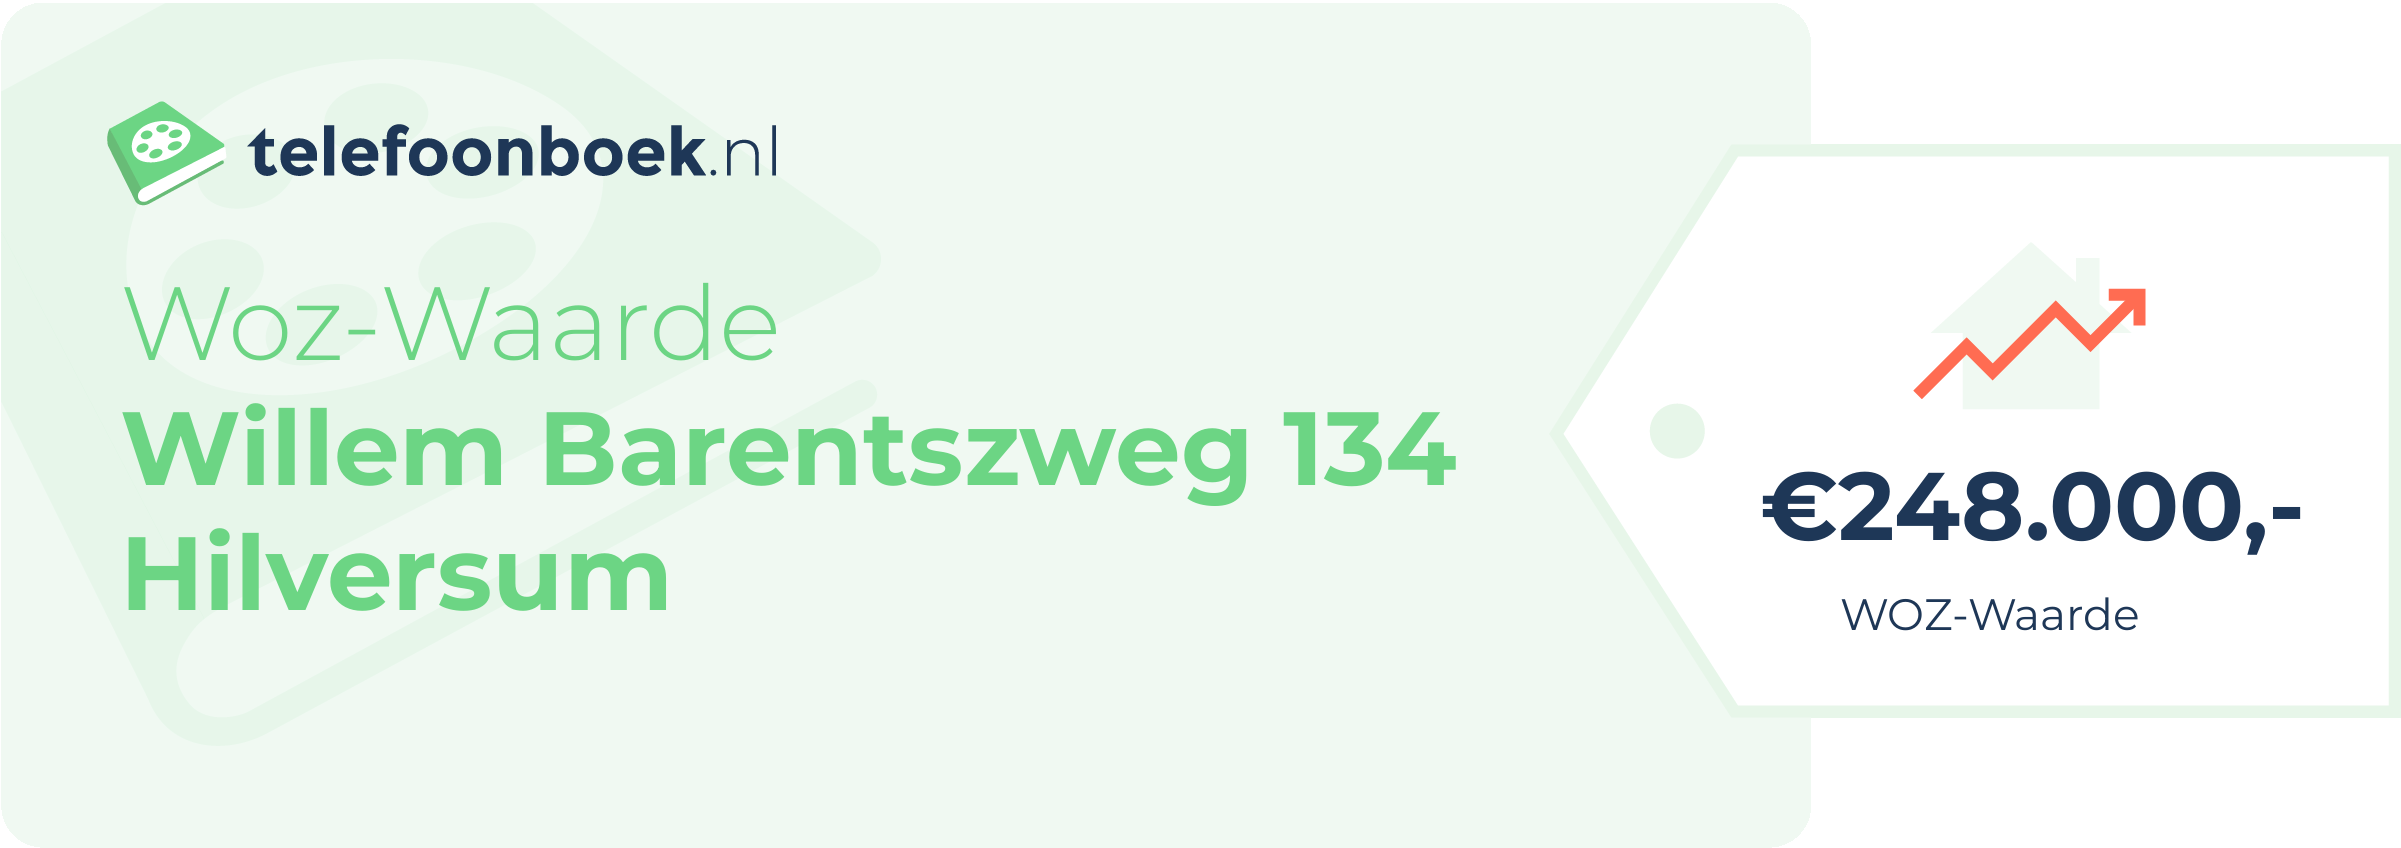 WOZ-waarde Willem Barentszweg 134 Hilversum